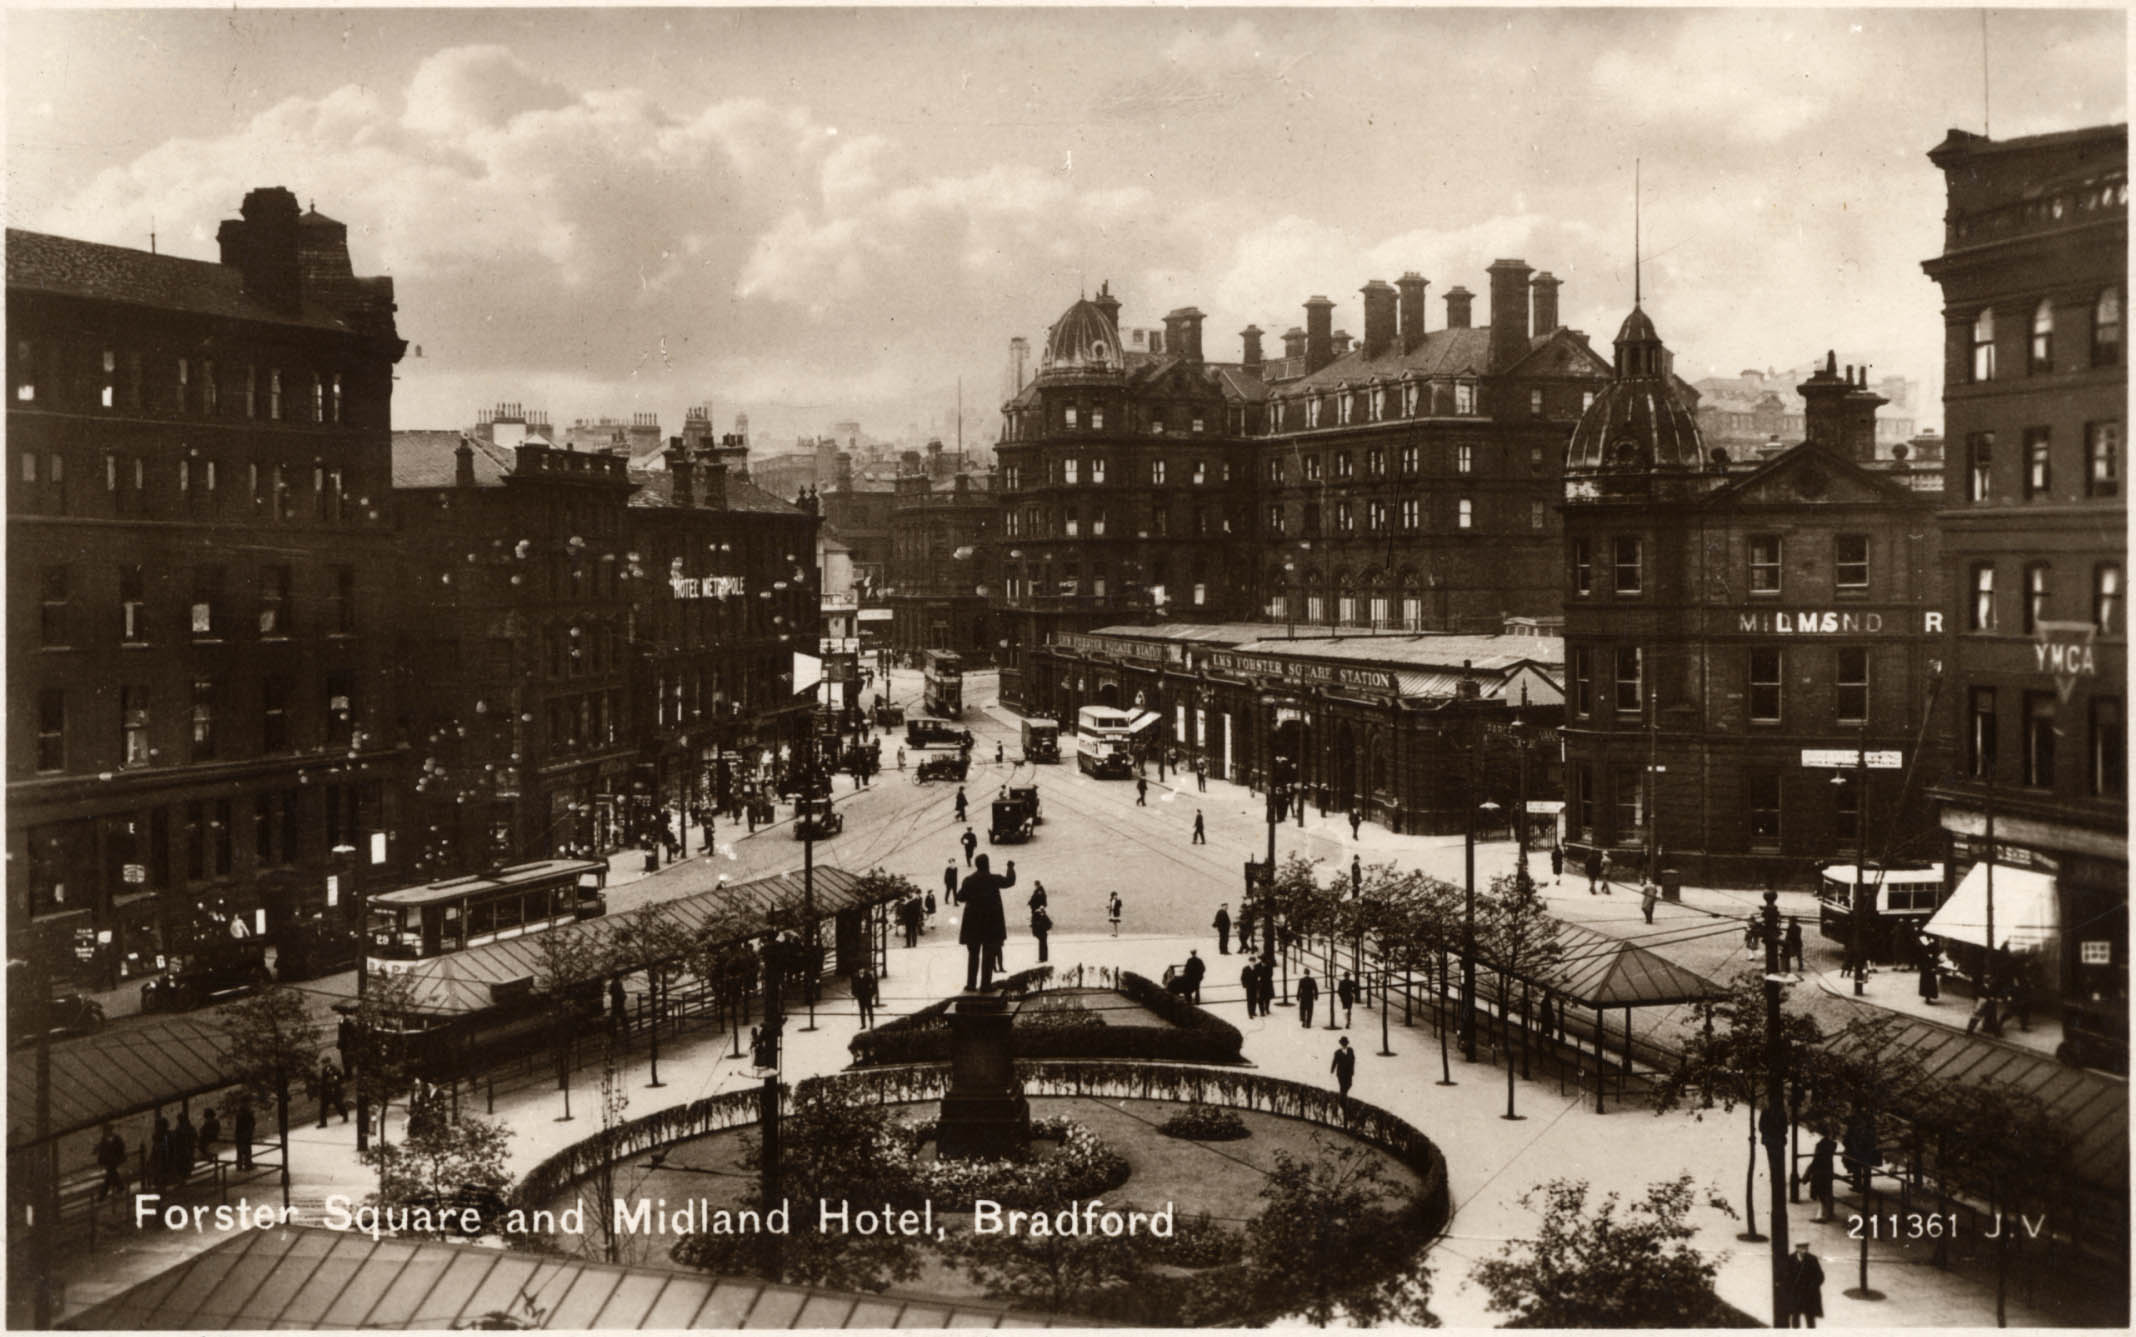 'Forster Square, Bradford,' by J Valentine & Co, 1930 (St Andrews JV-211361)